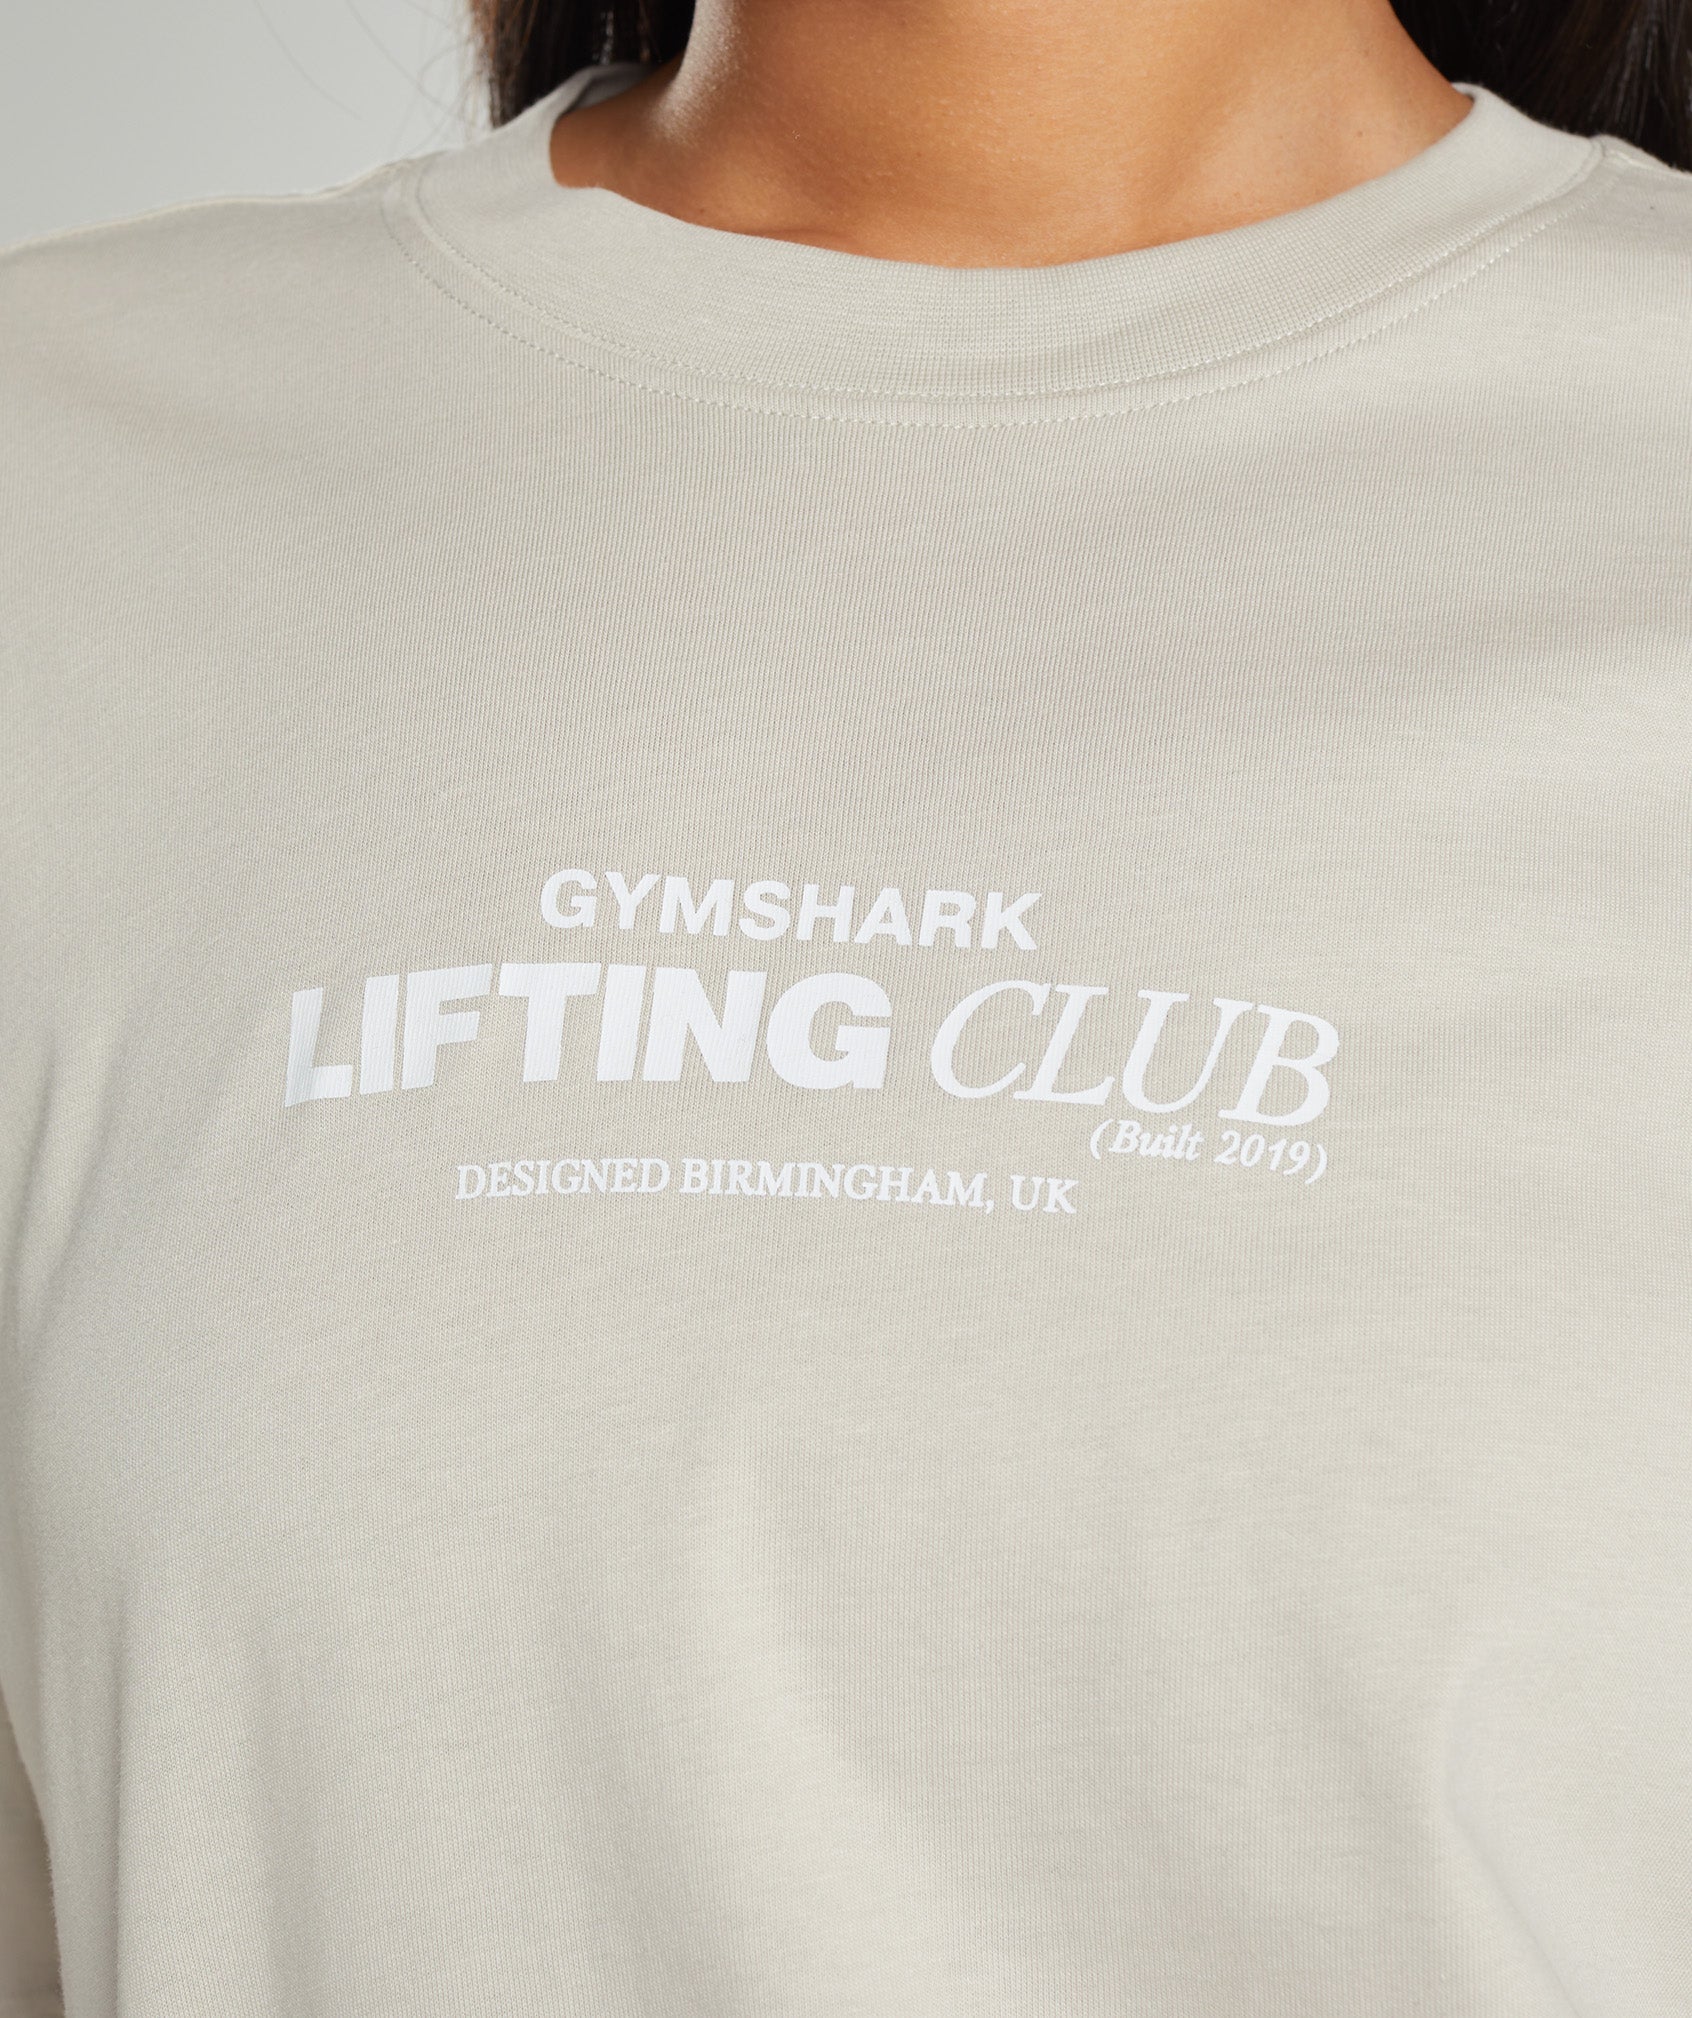 Social Club Oversized T-Shirt